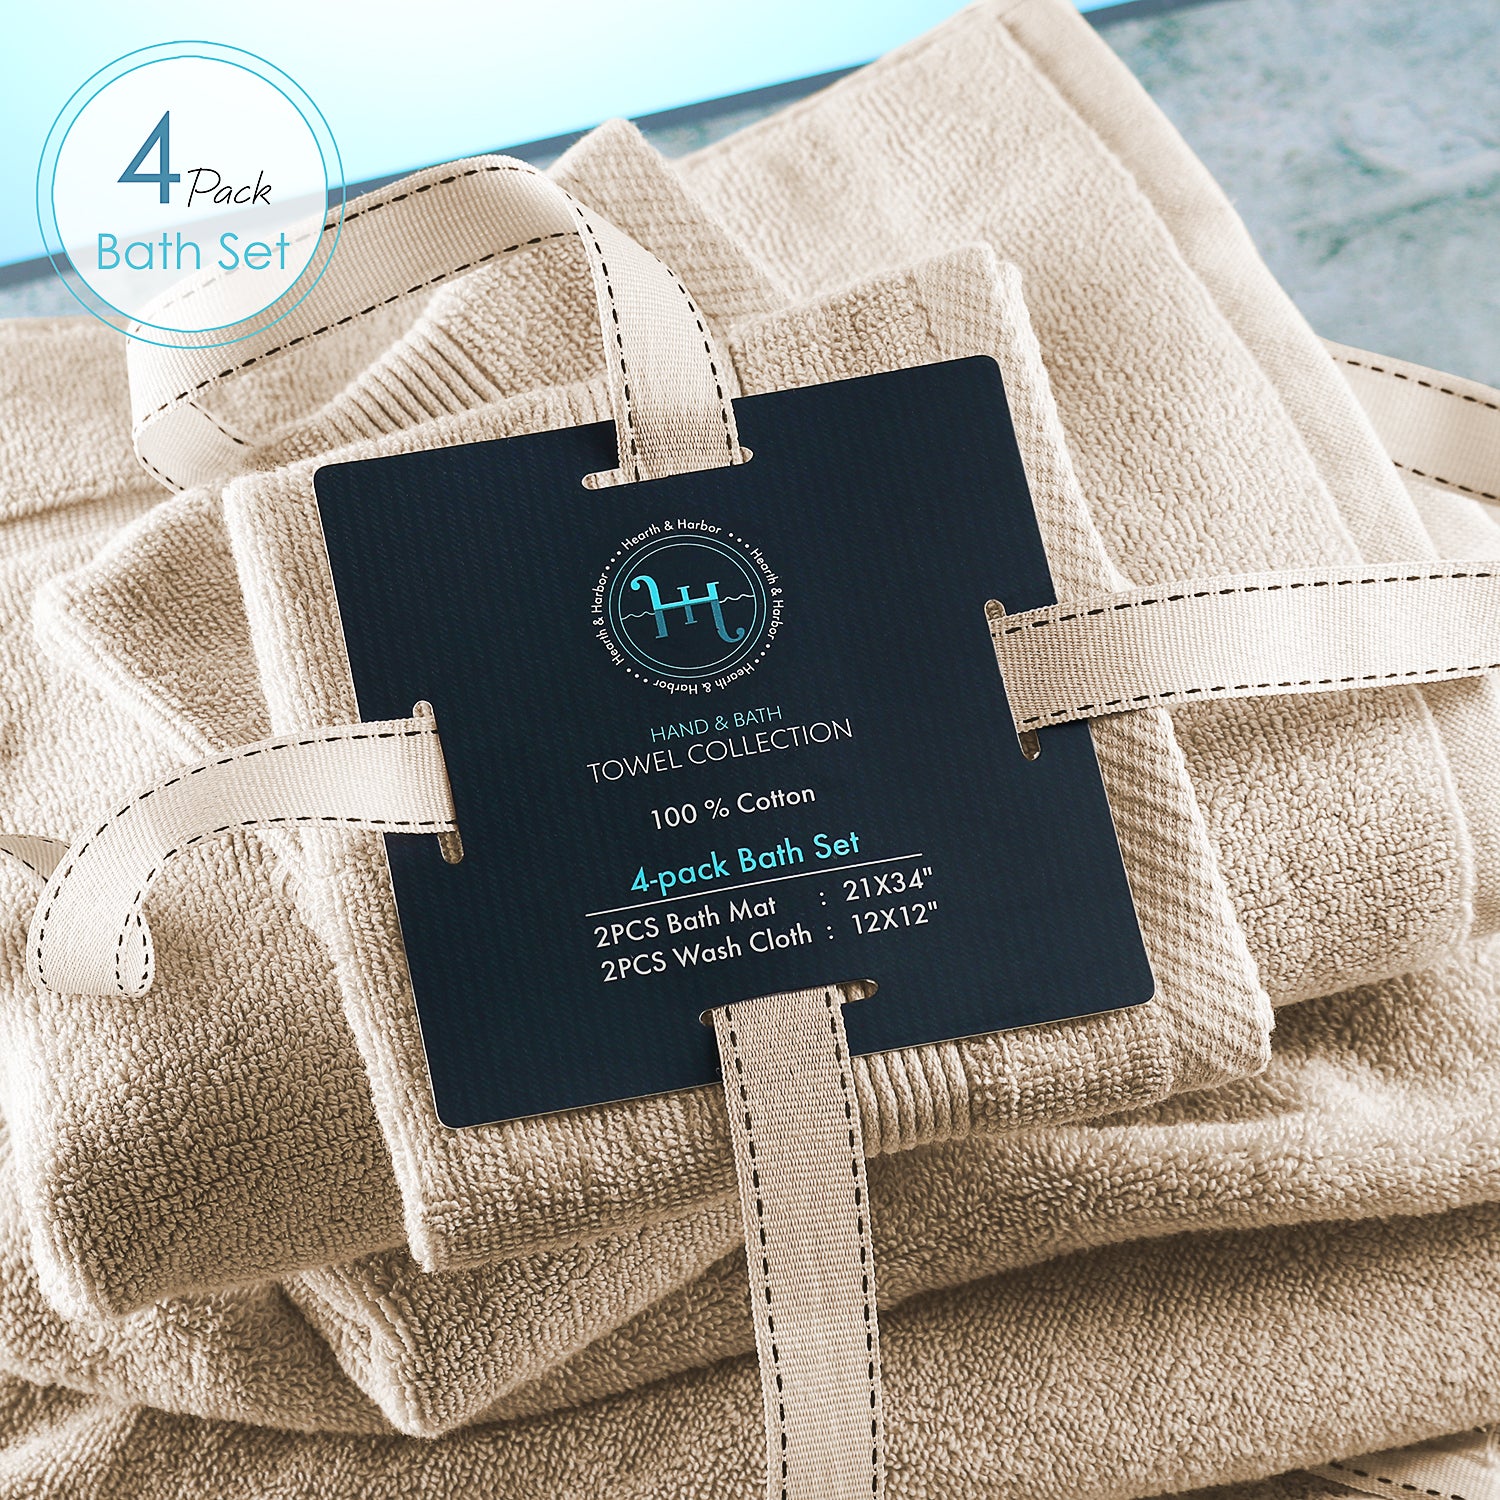 Hearth & Harbor Bath Towel Collection, 100% Cotton Luxury Soft Set of 2 Bath  Mats & 2 Wash Cloth Towels - Black 